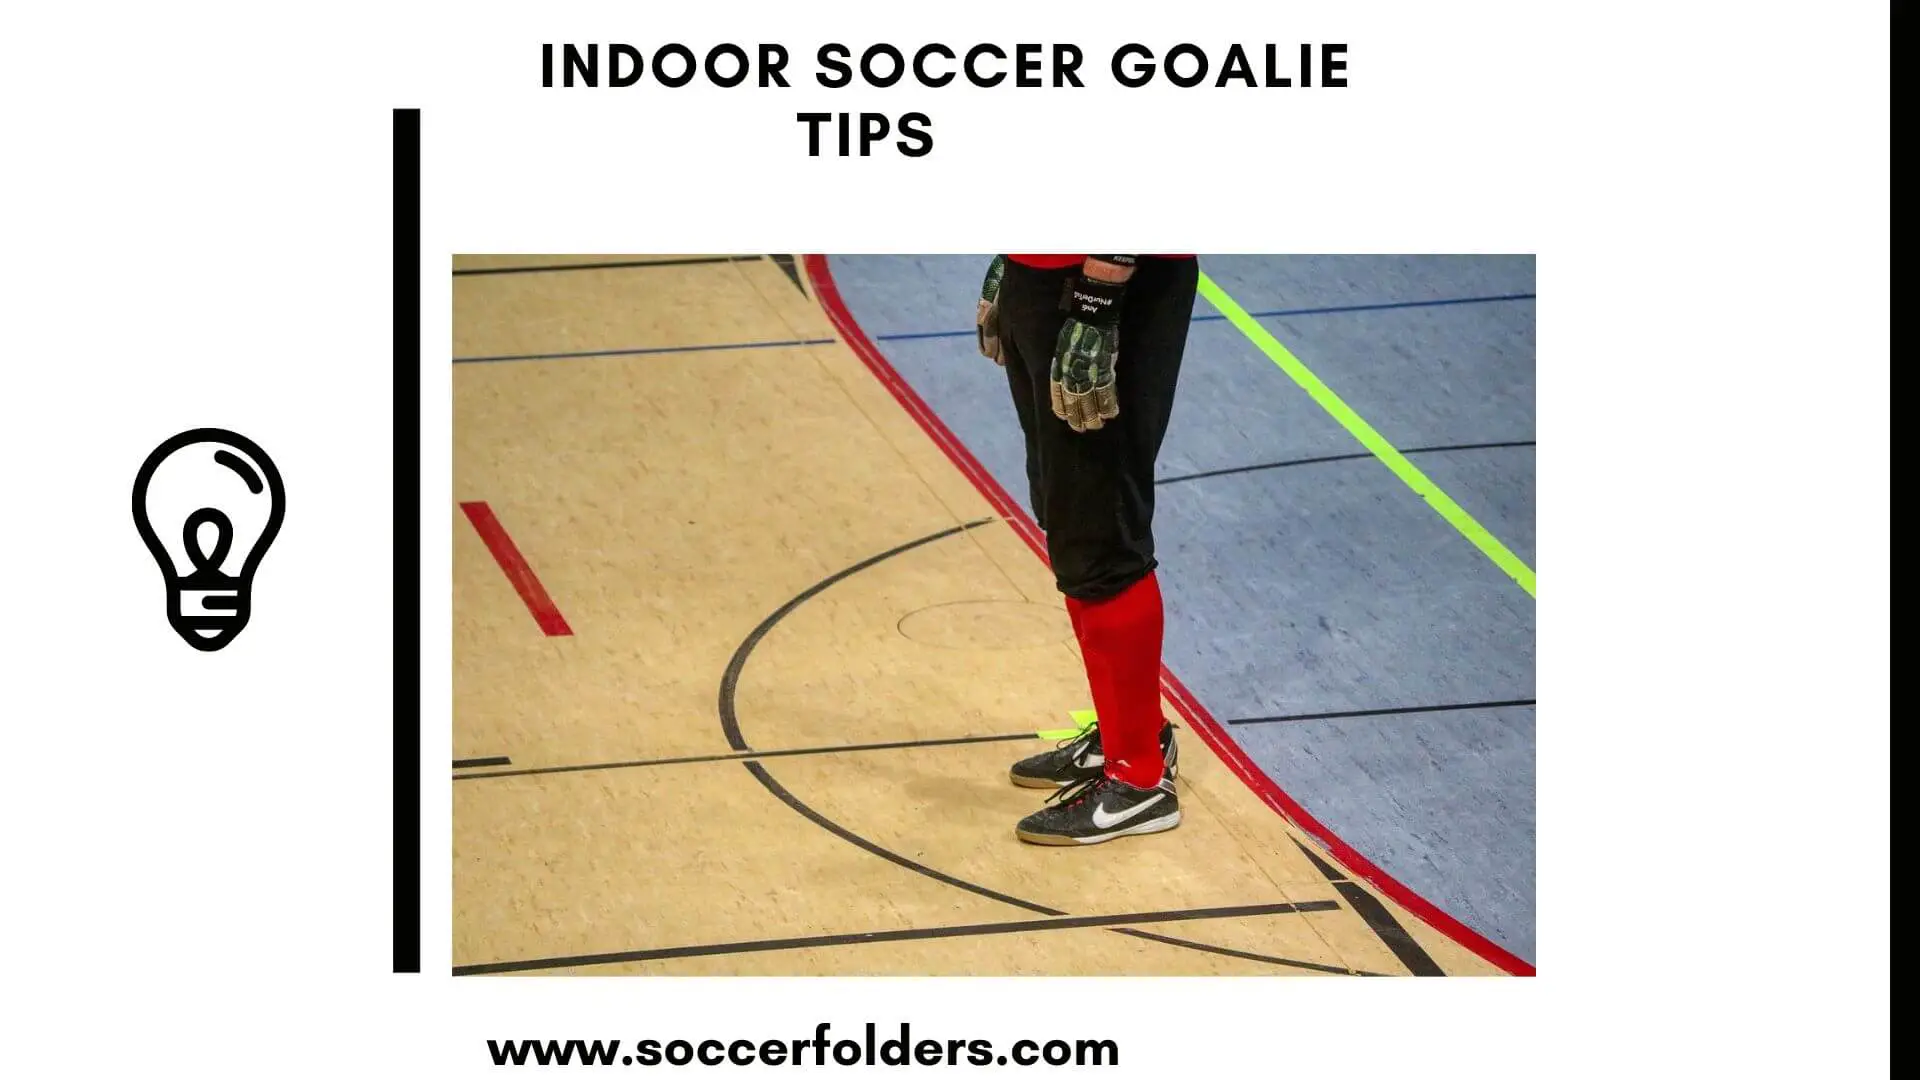 Indoor soccer goalie tips - Featured image